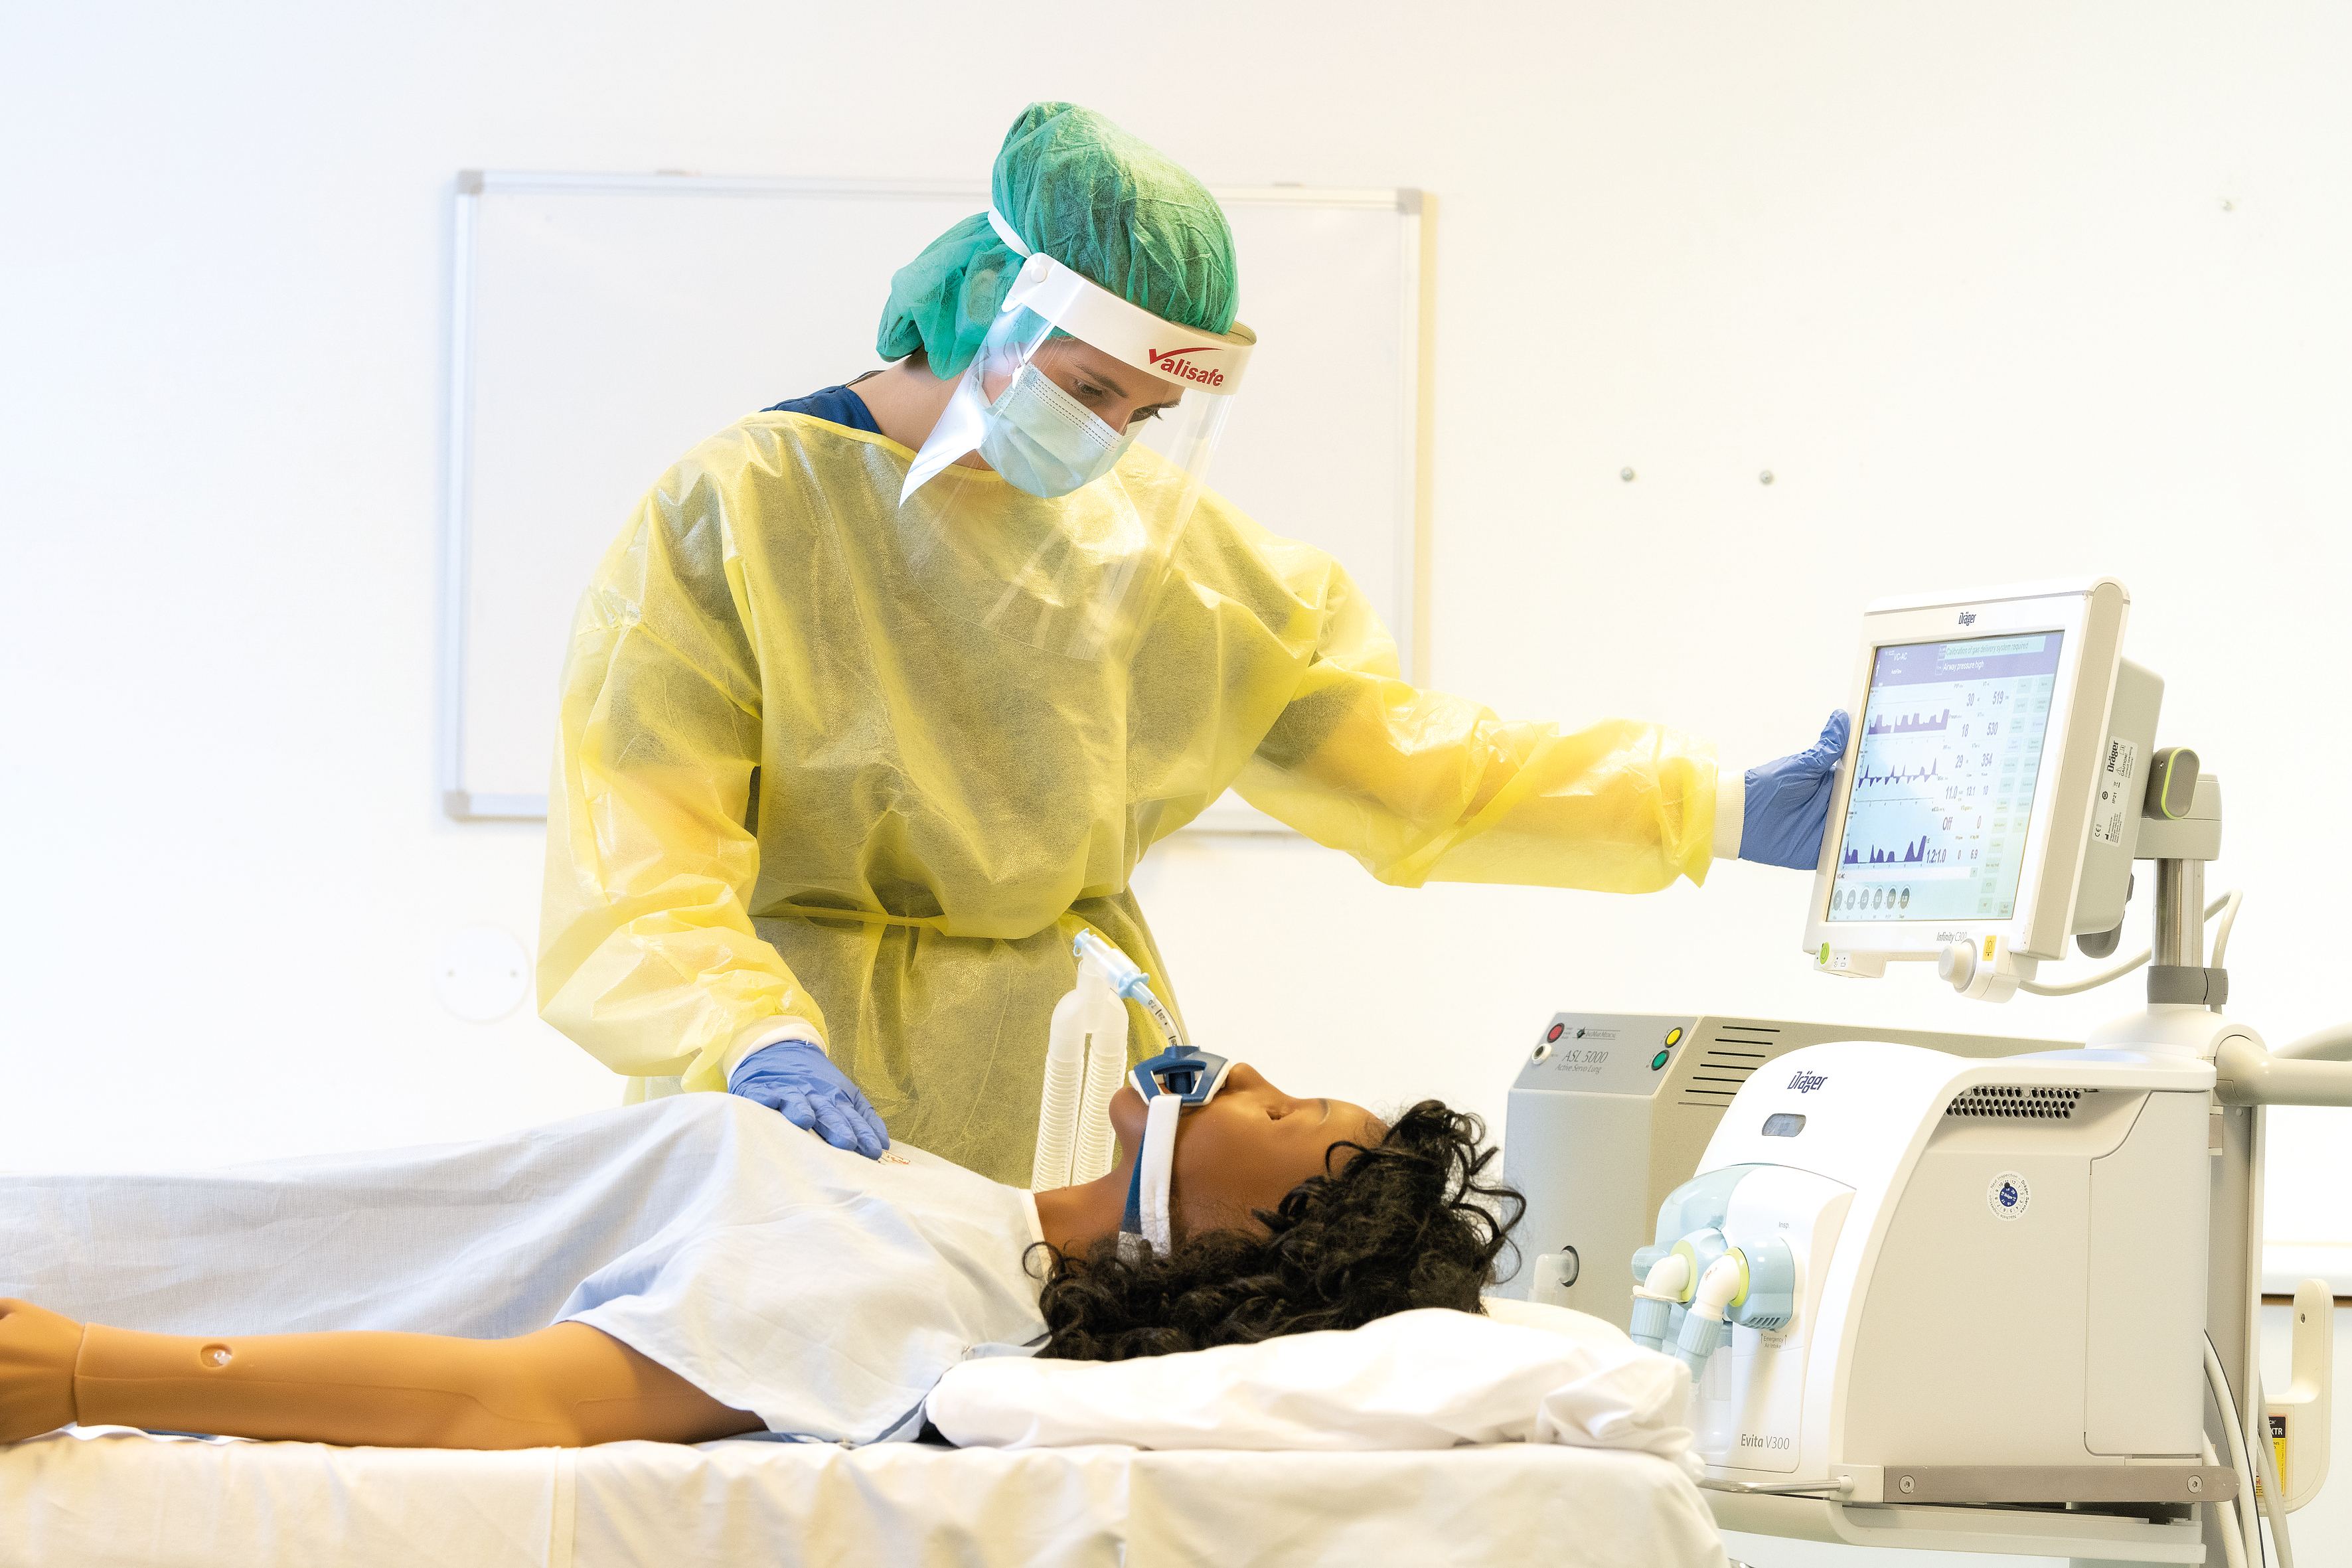 nursing anne simulator african descent surgeon